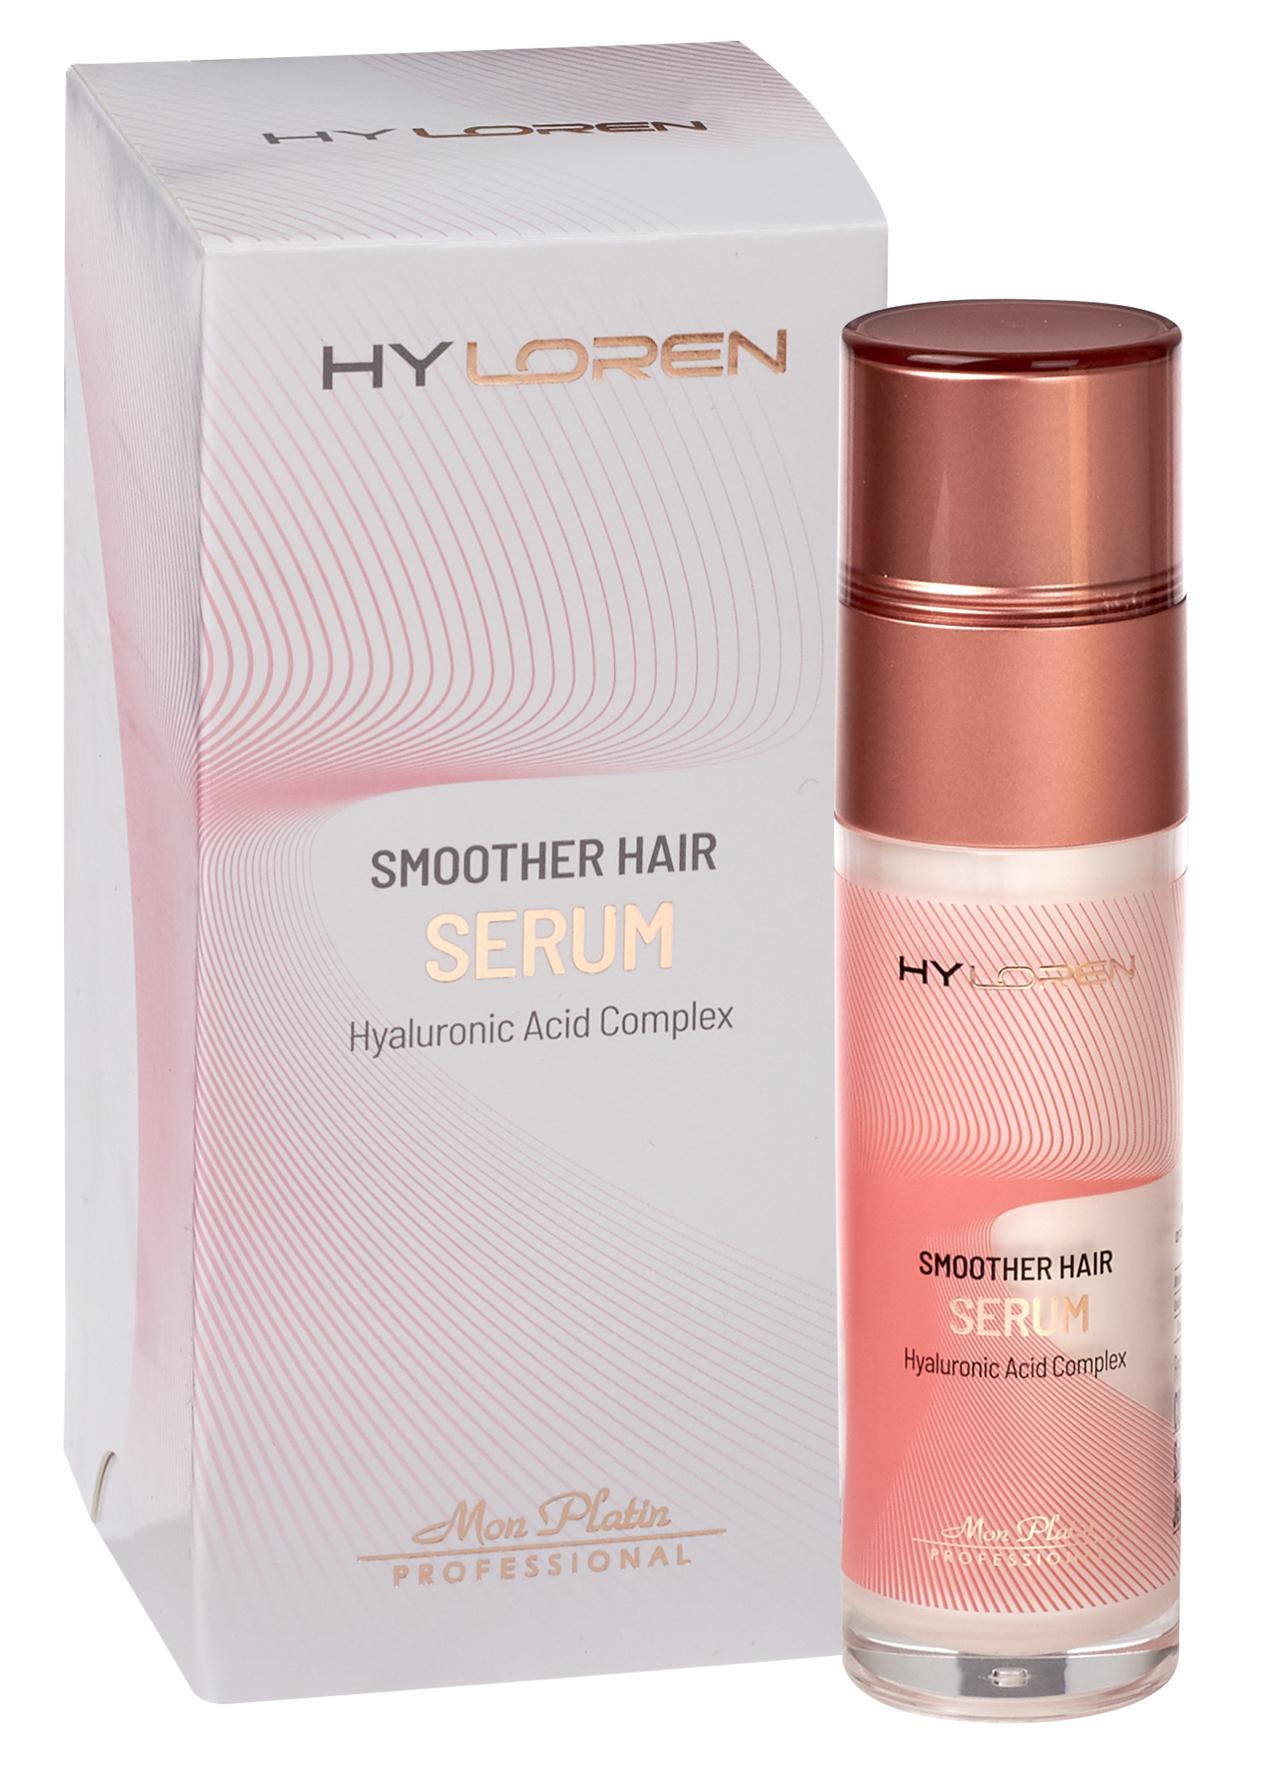 MON PLATIN Hyloren Premium Smoother Hair serum 50ml